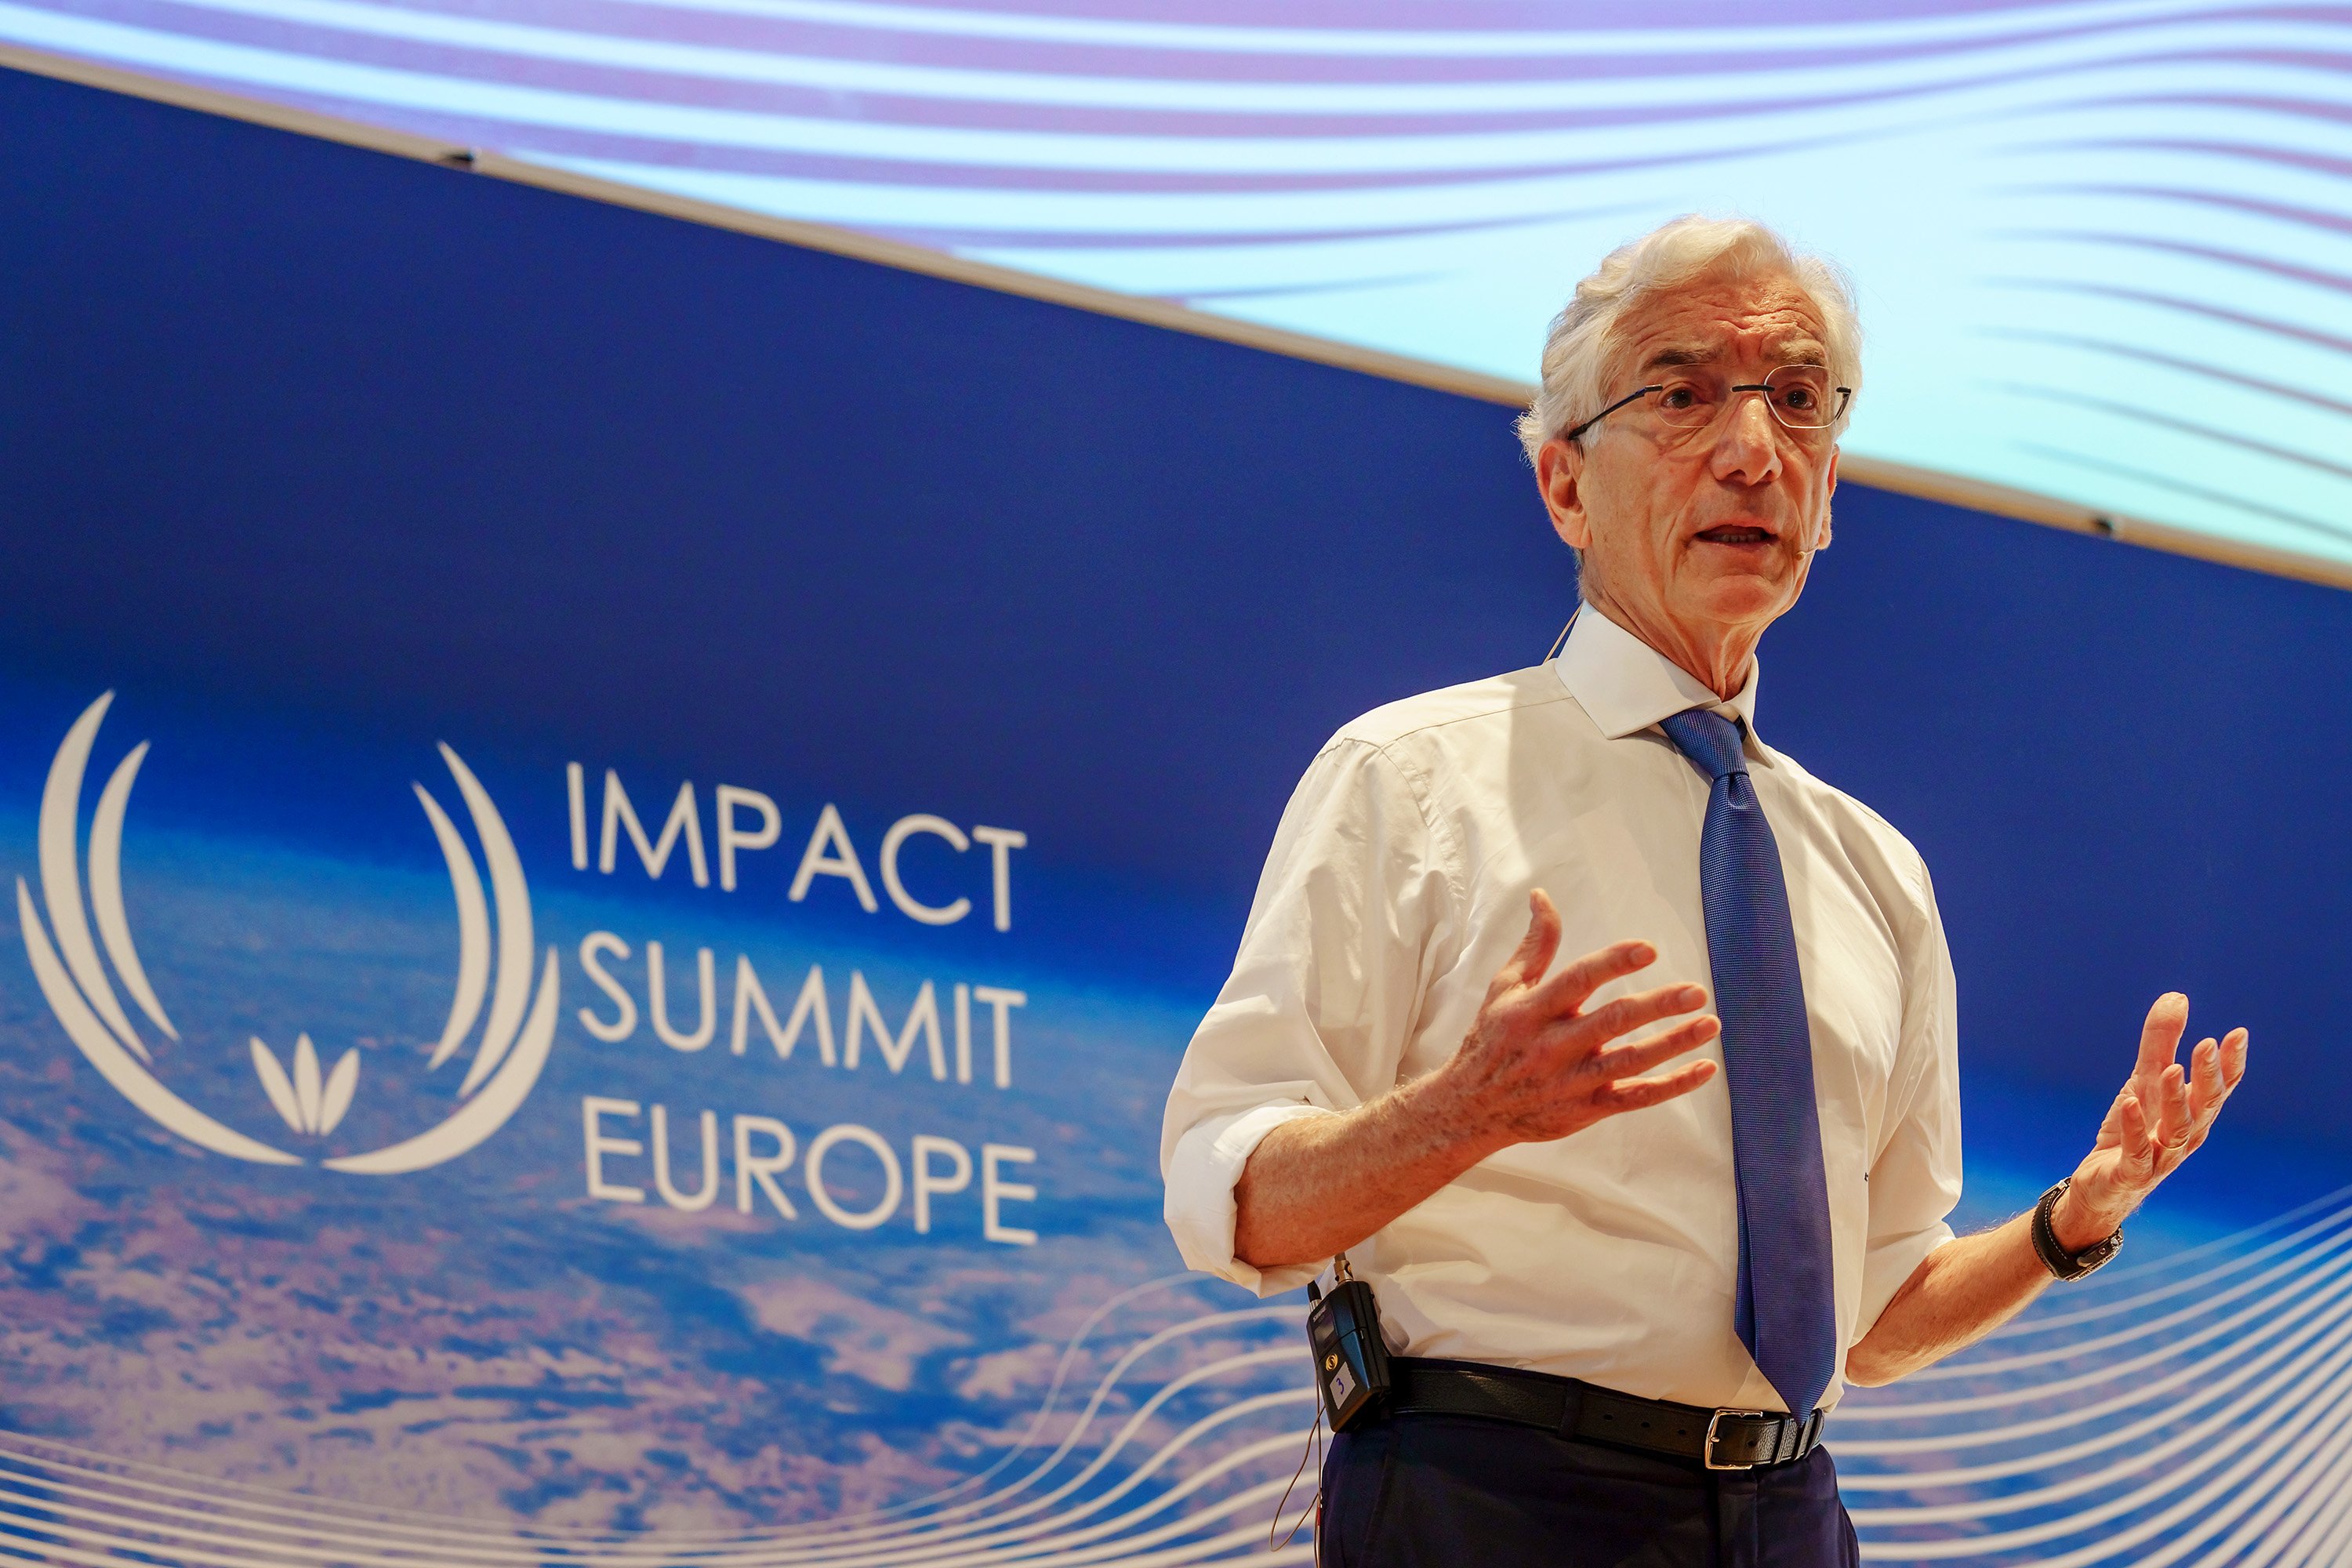 Impact Summit Europe 2019